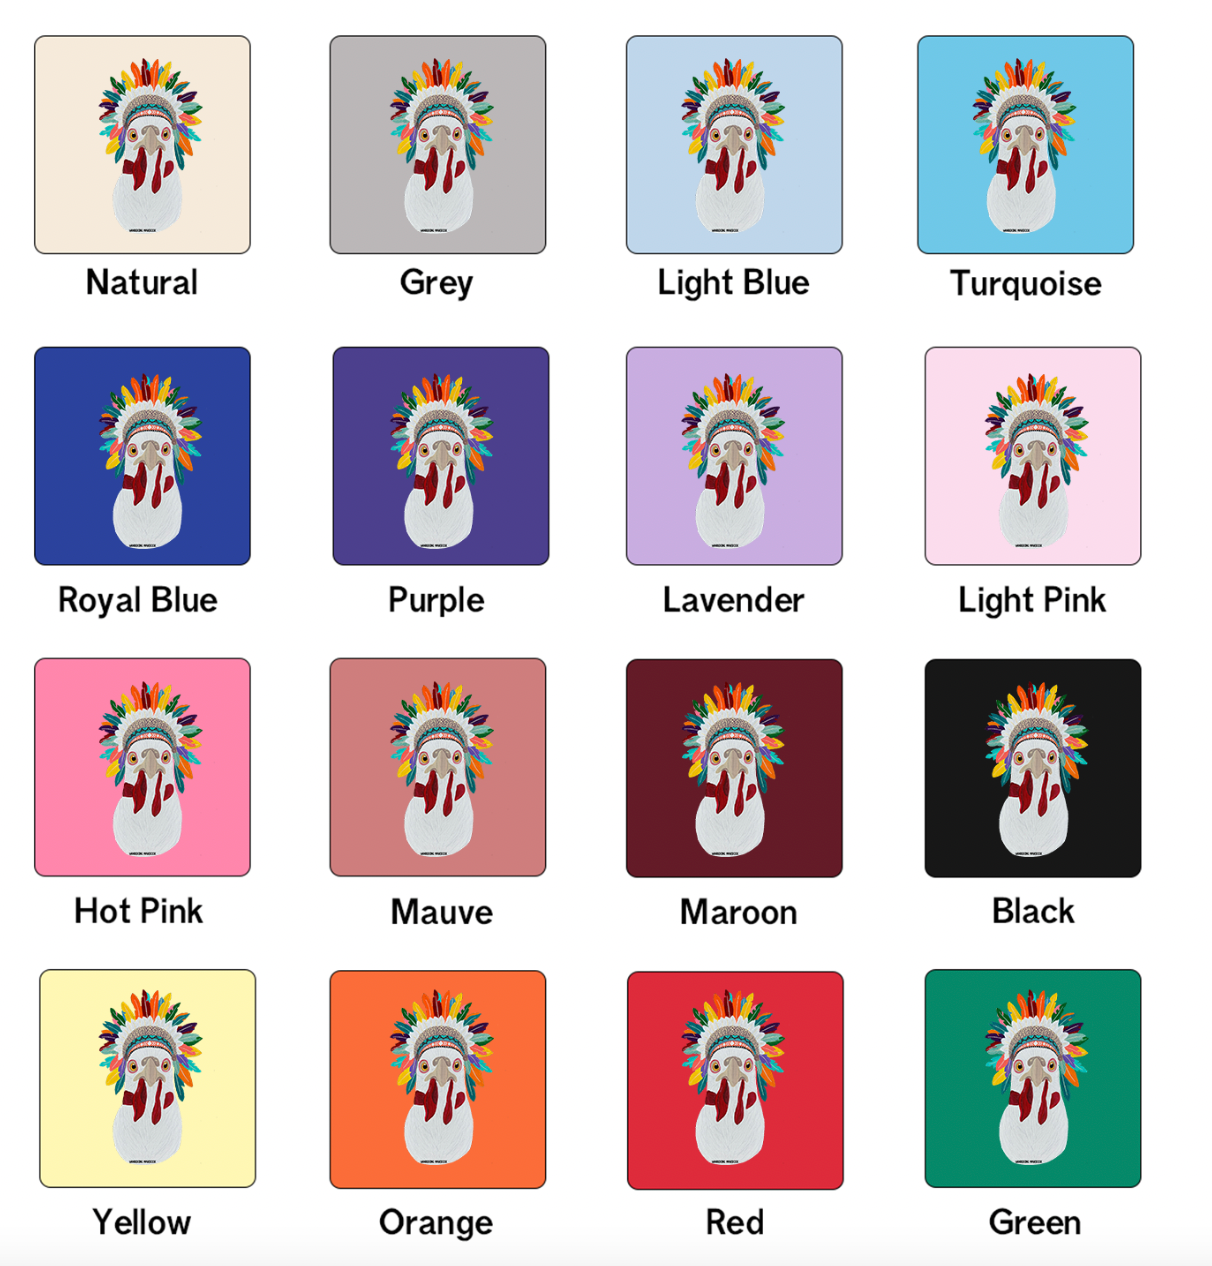 Chicken Headdress One Piece/T-Shirt (Newborn - Youth XL) - Multiple Colors!